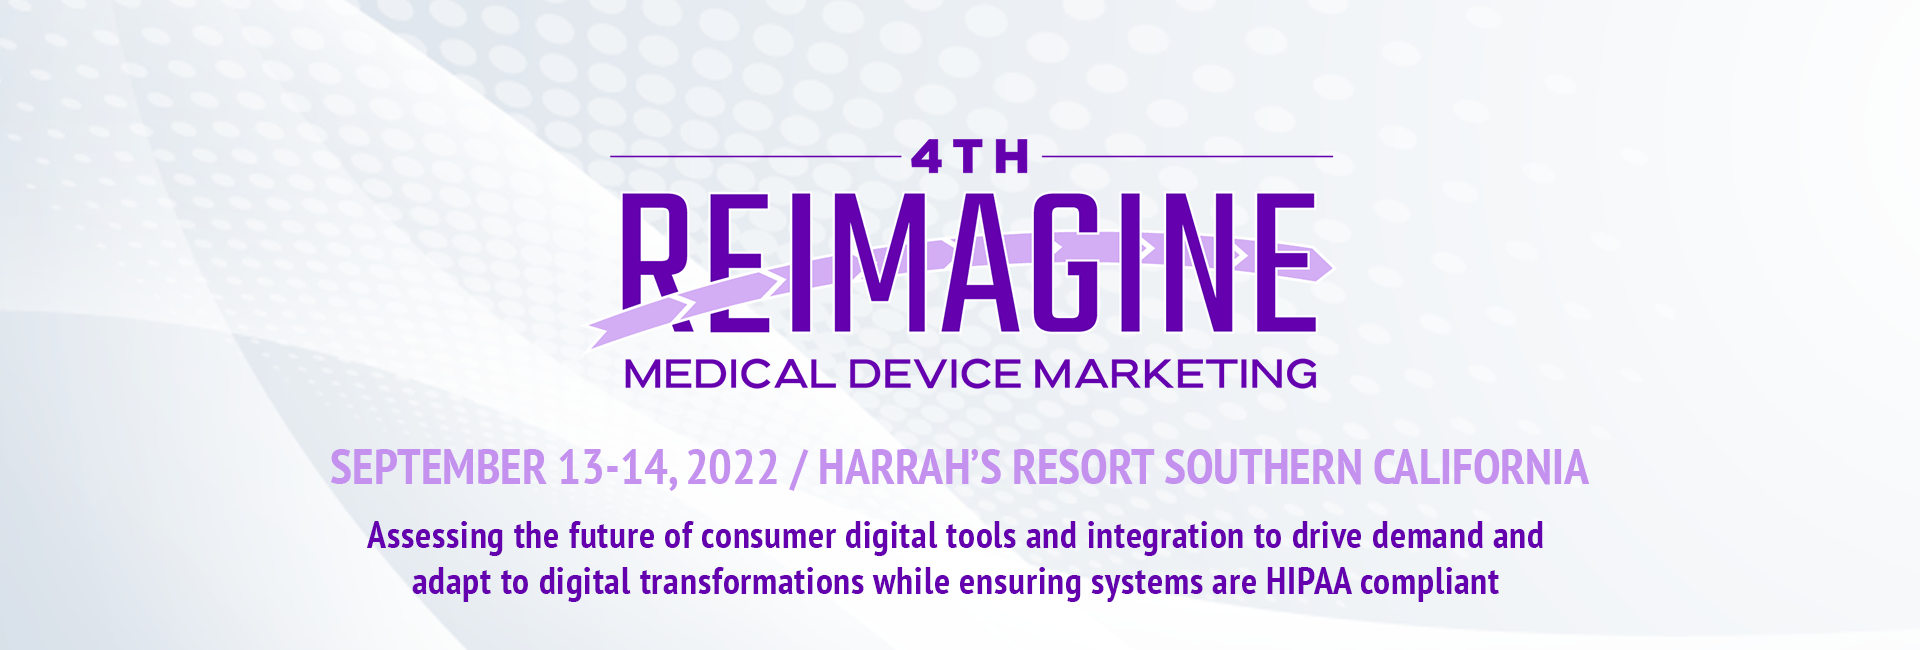 ReImagine Medical Device Marketing